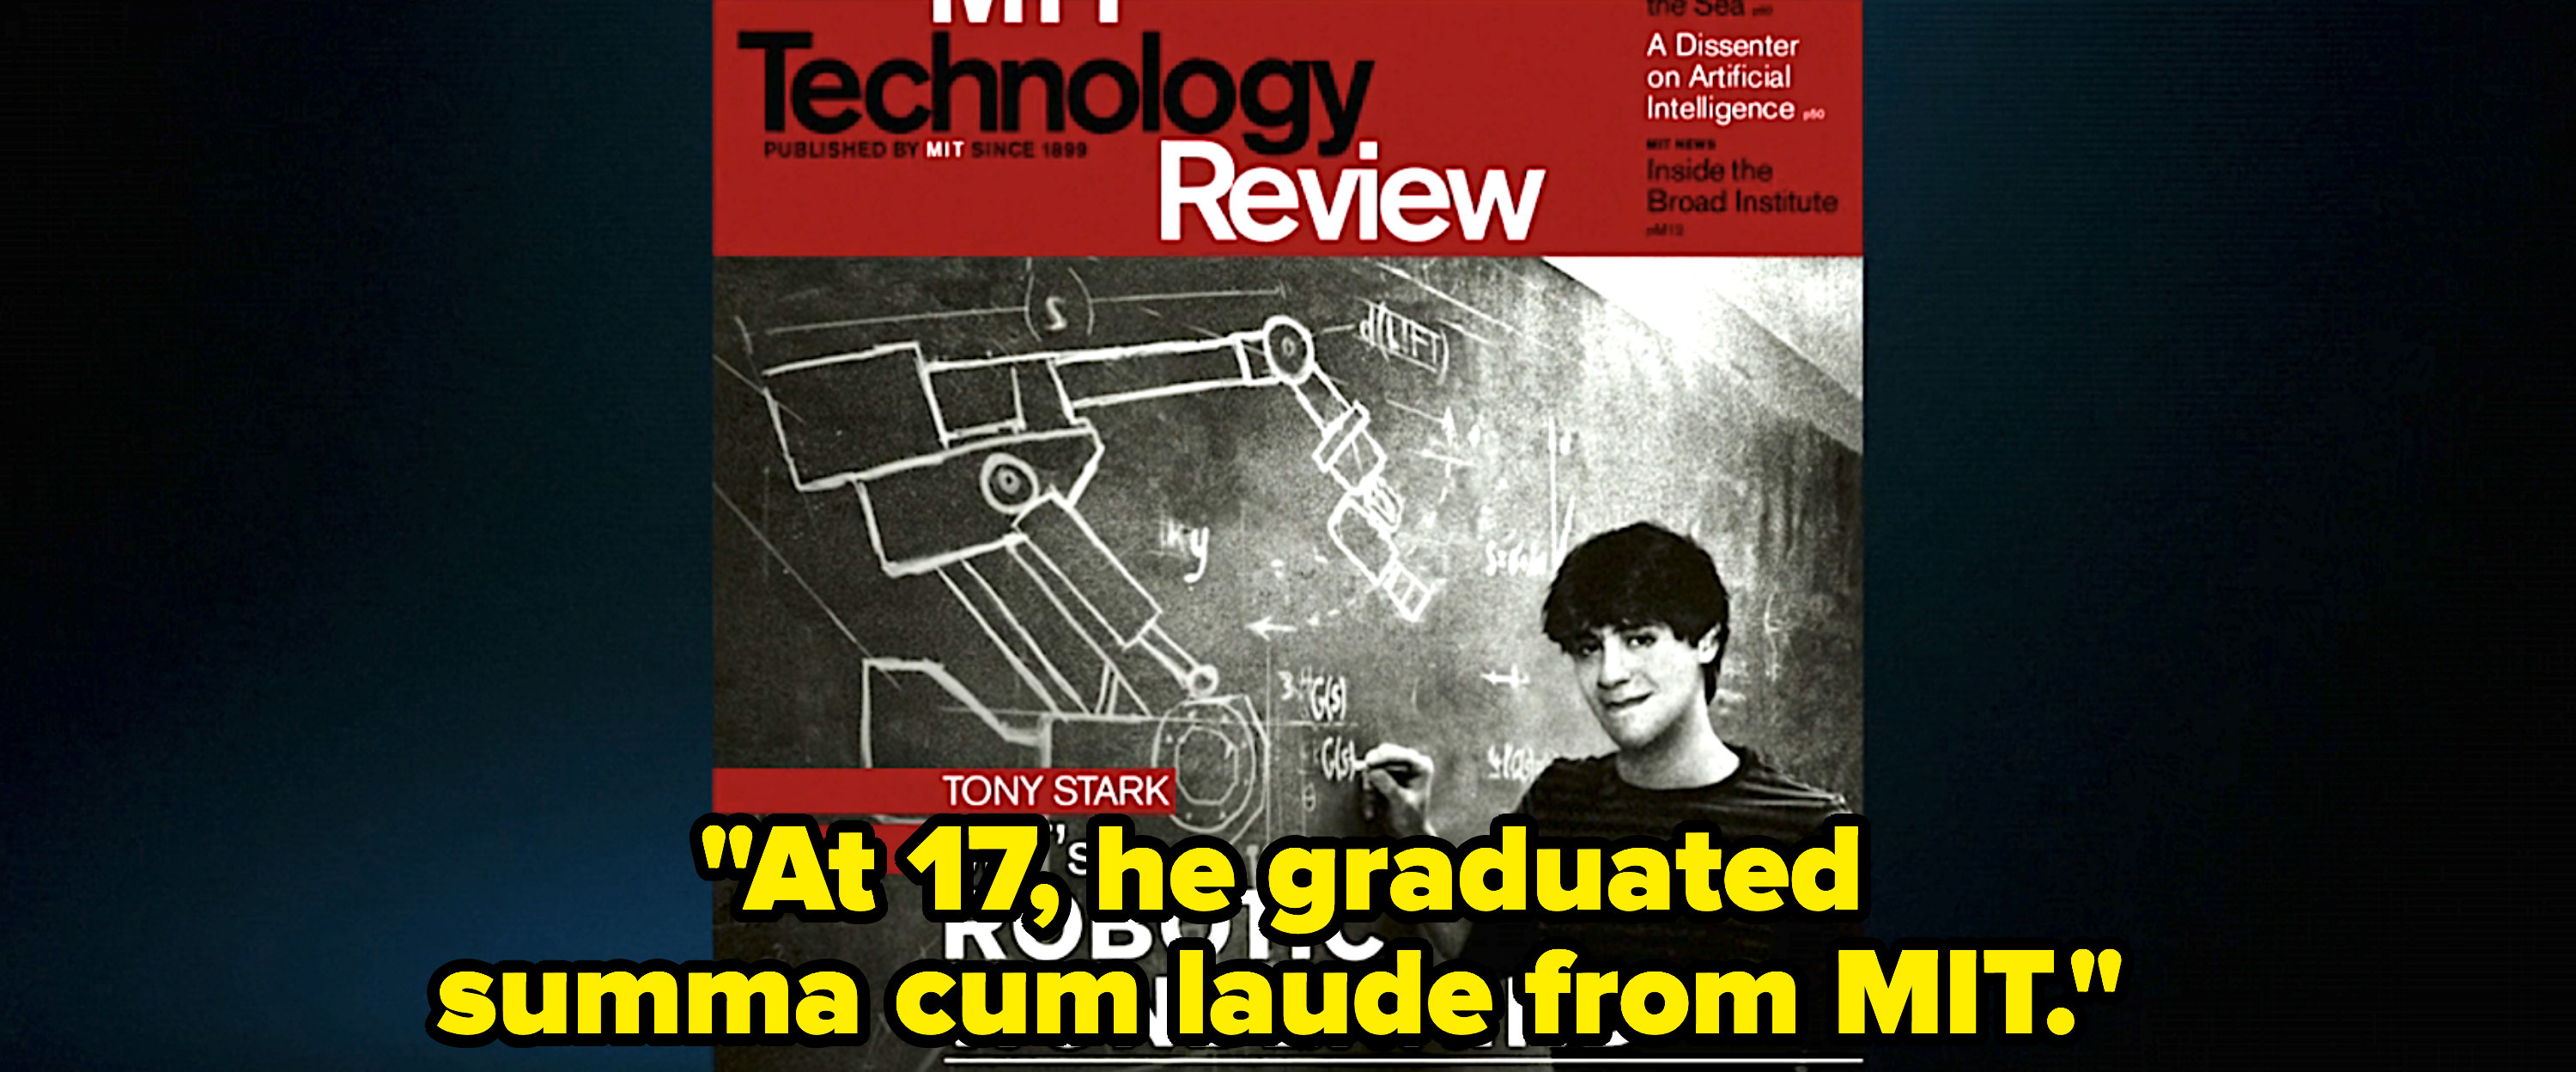 the presentation showing he graduated summa cum laude